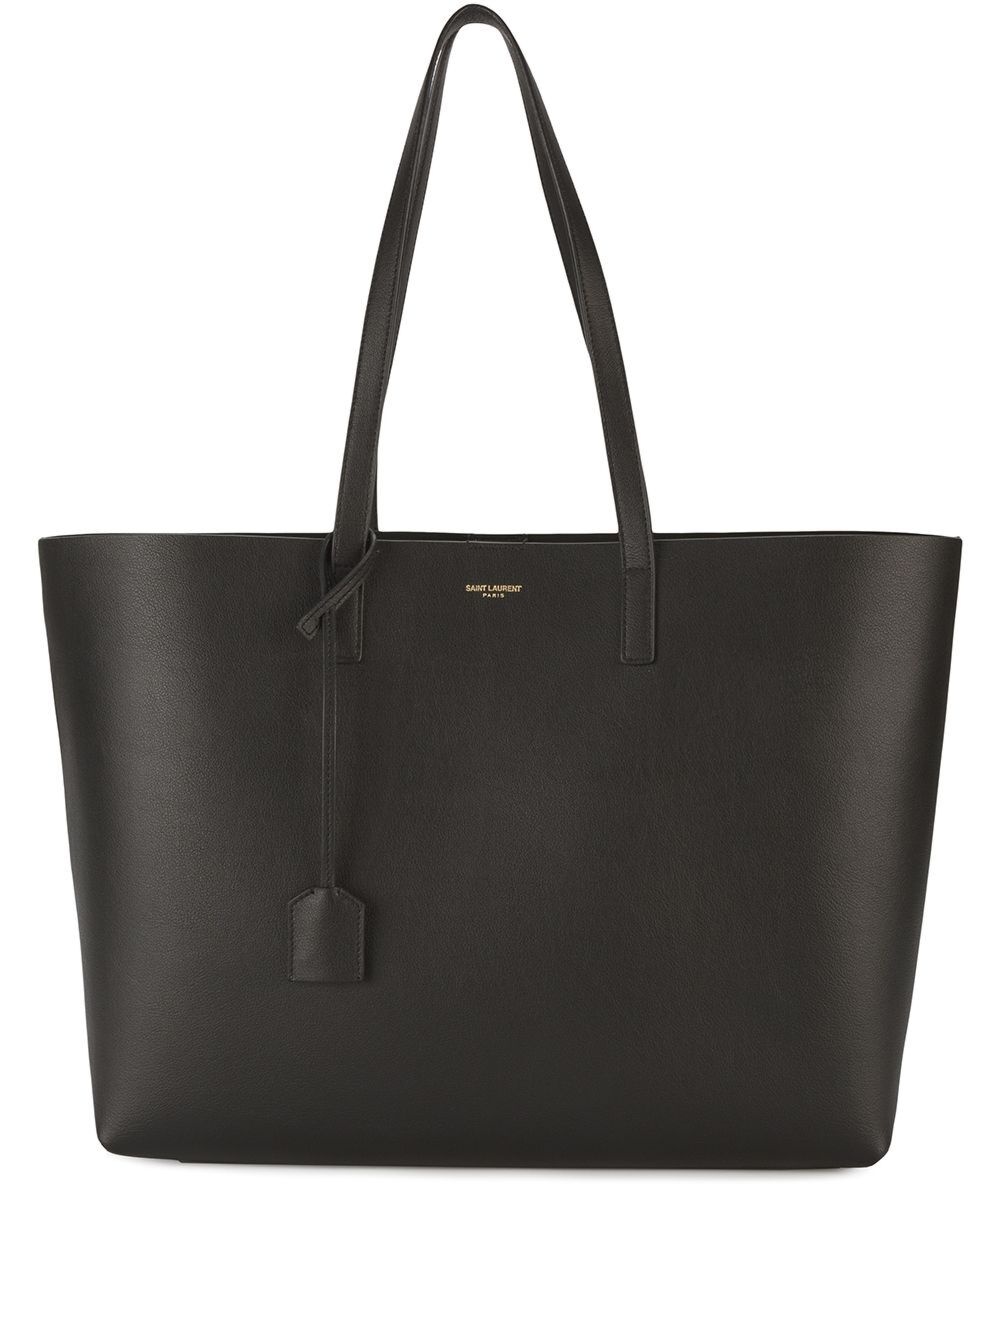 Saint laurent leather shopping bag - 1